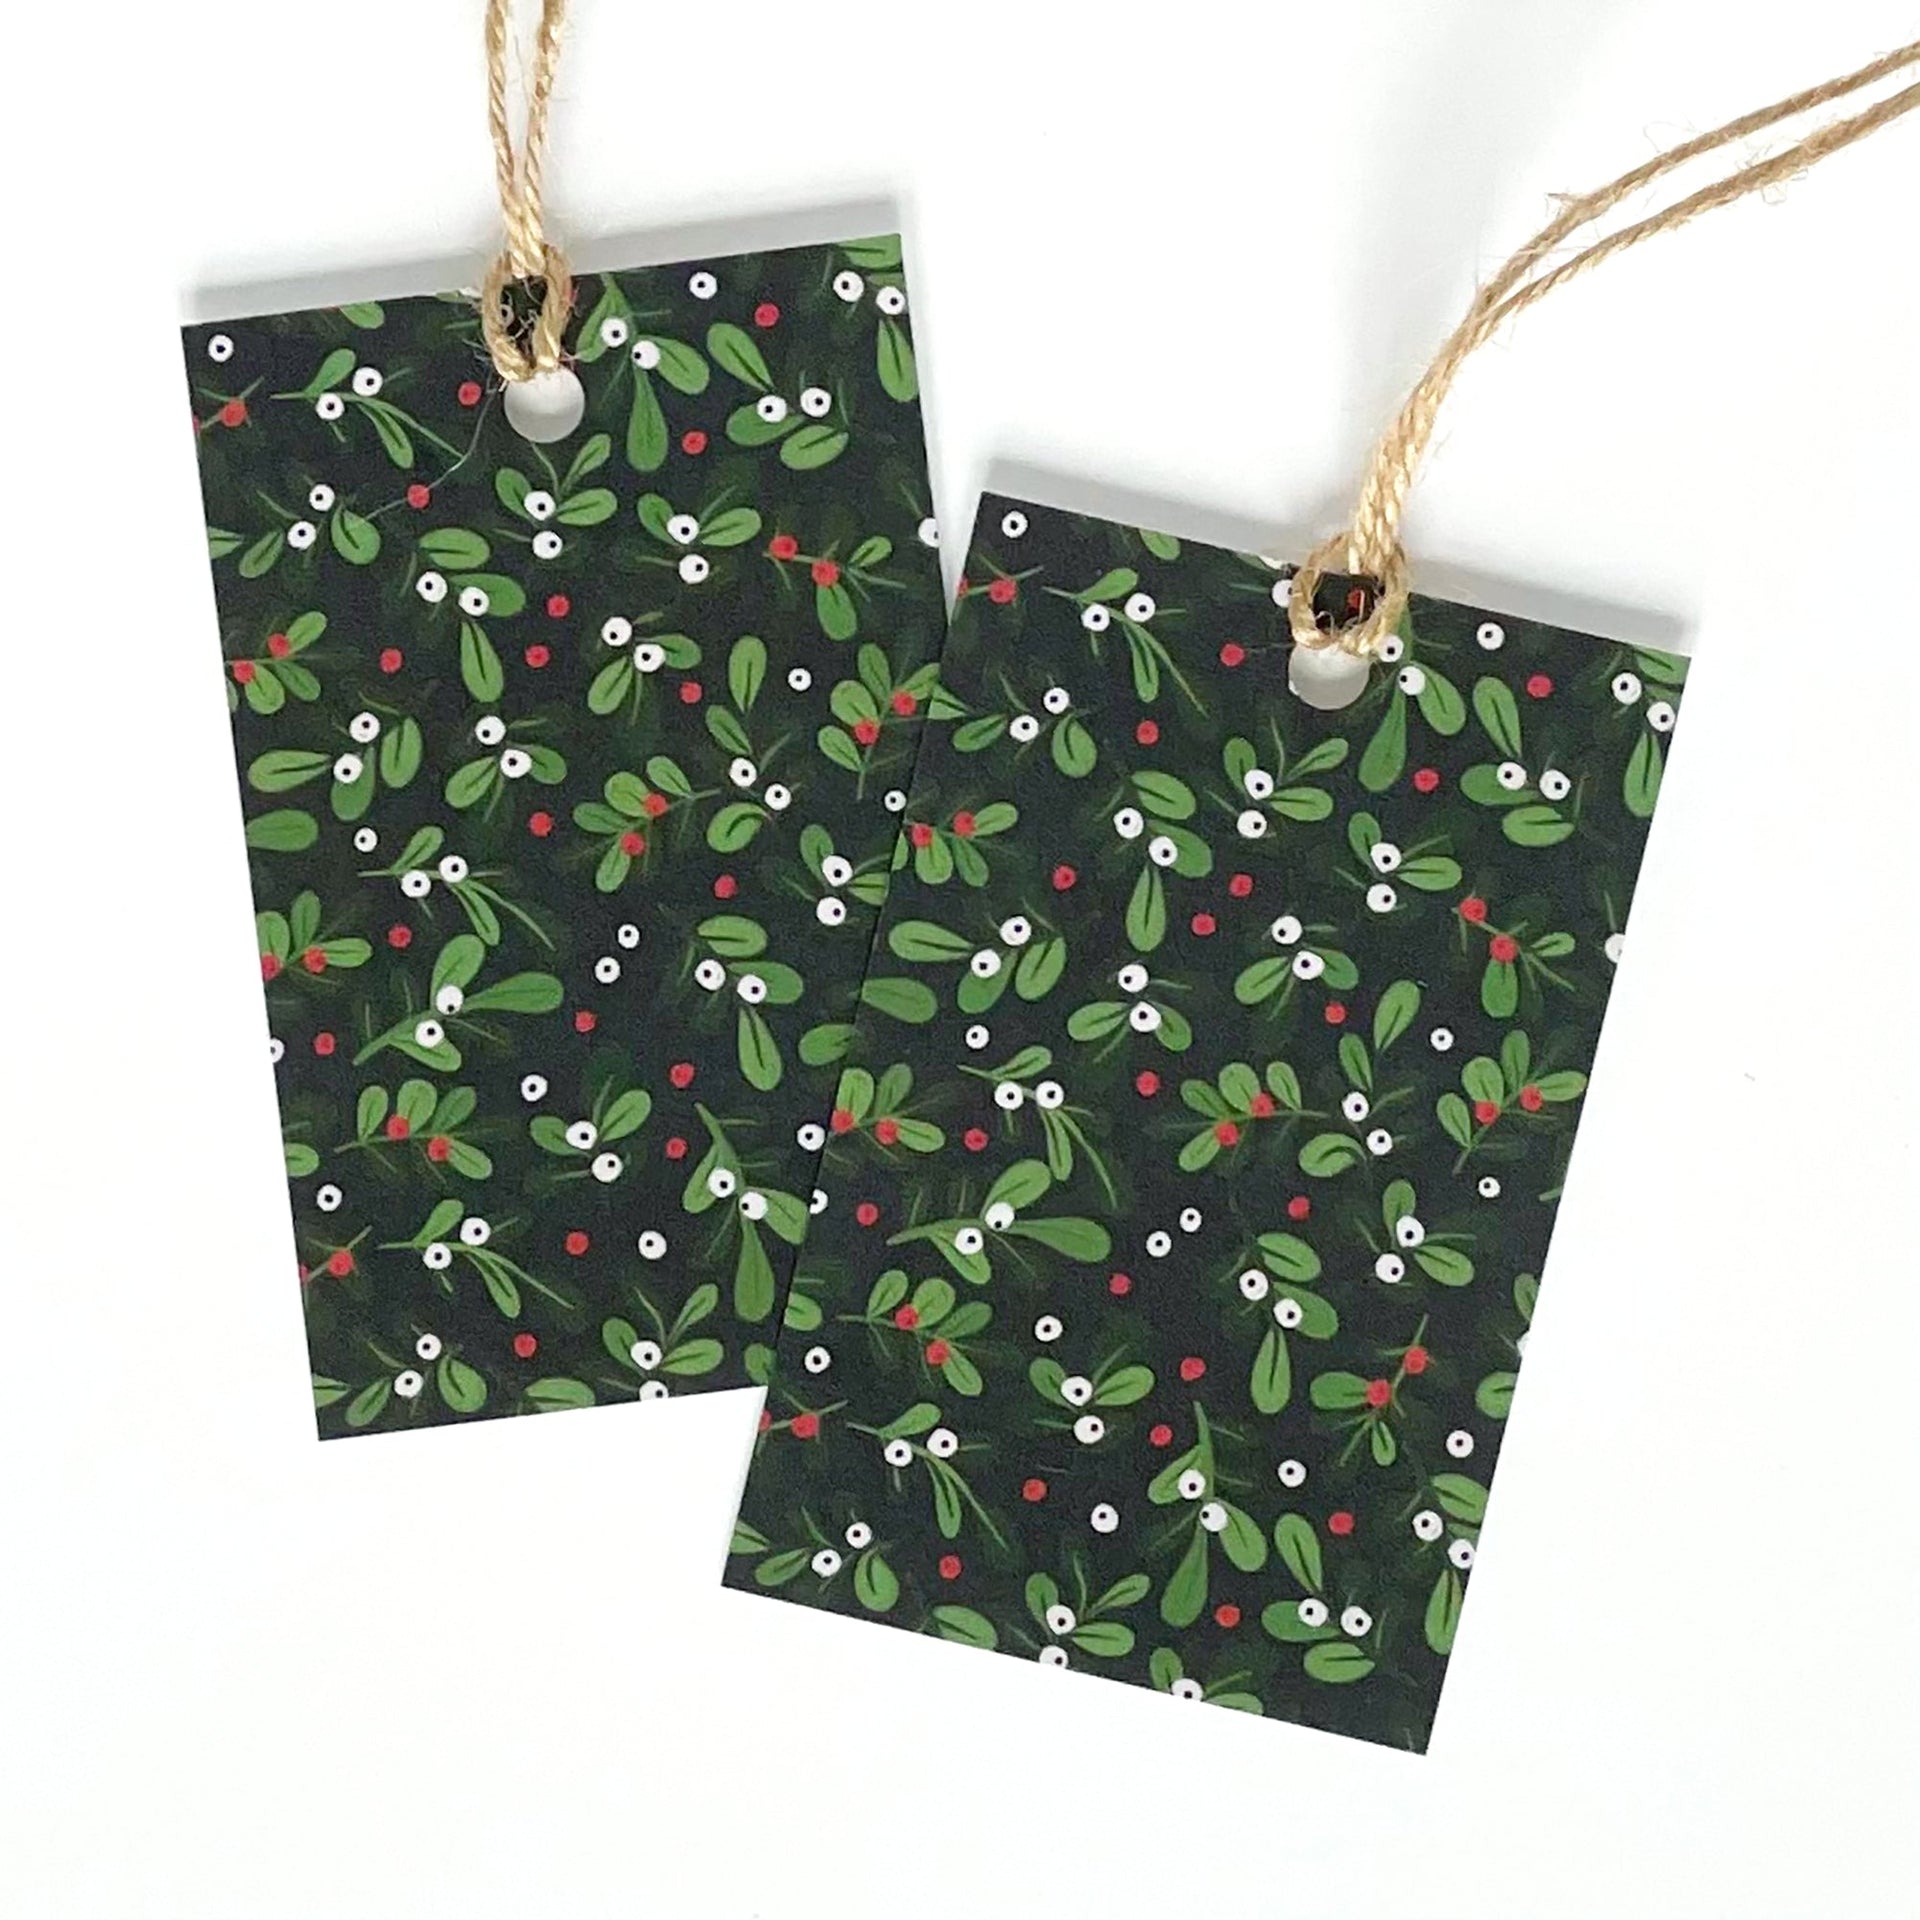 Green Mistletoe Gift Tags x 4 - Made Scotland